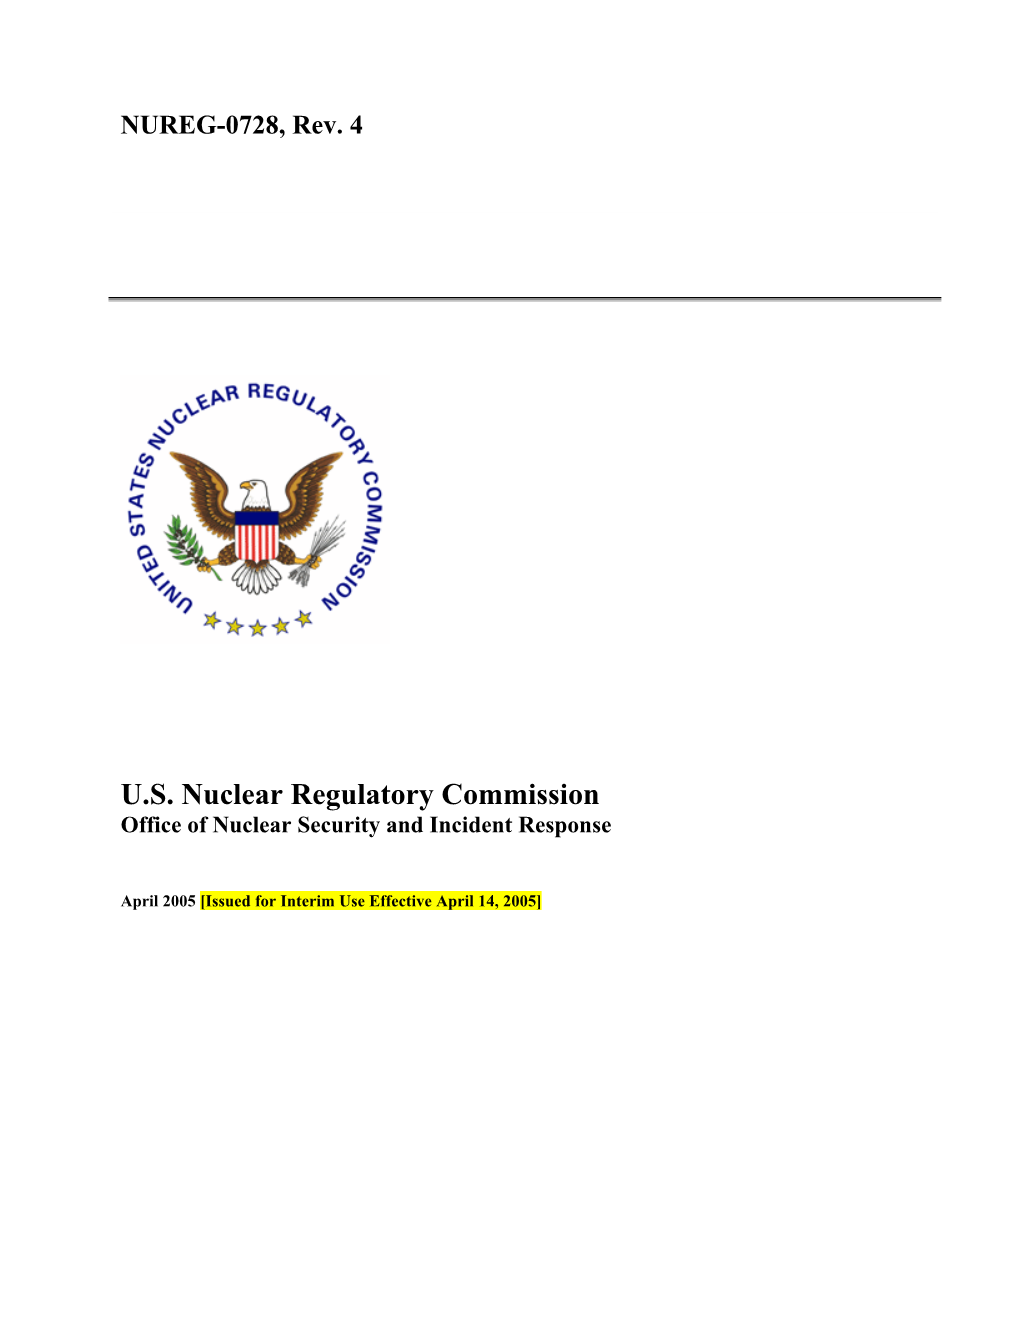 NRC Incident Response Plan (NUREG-0728)